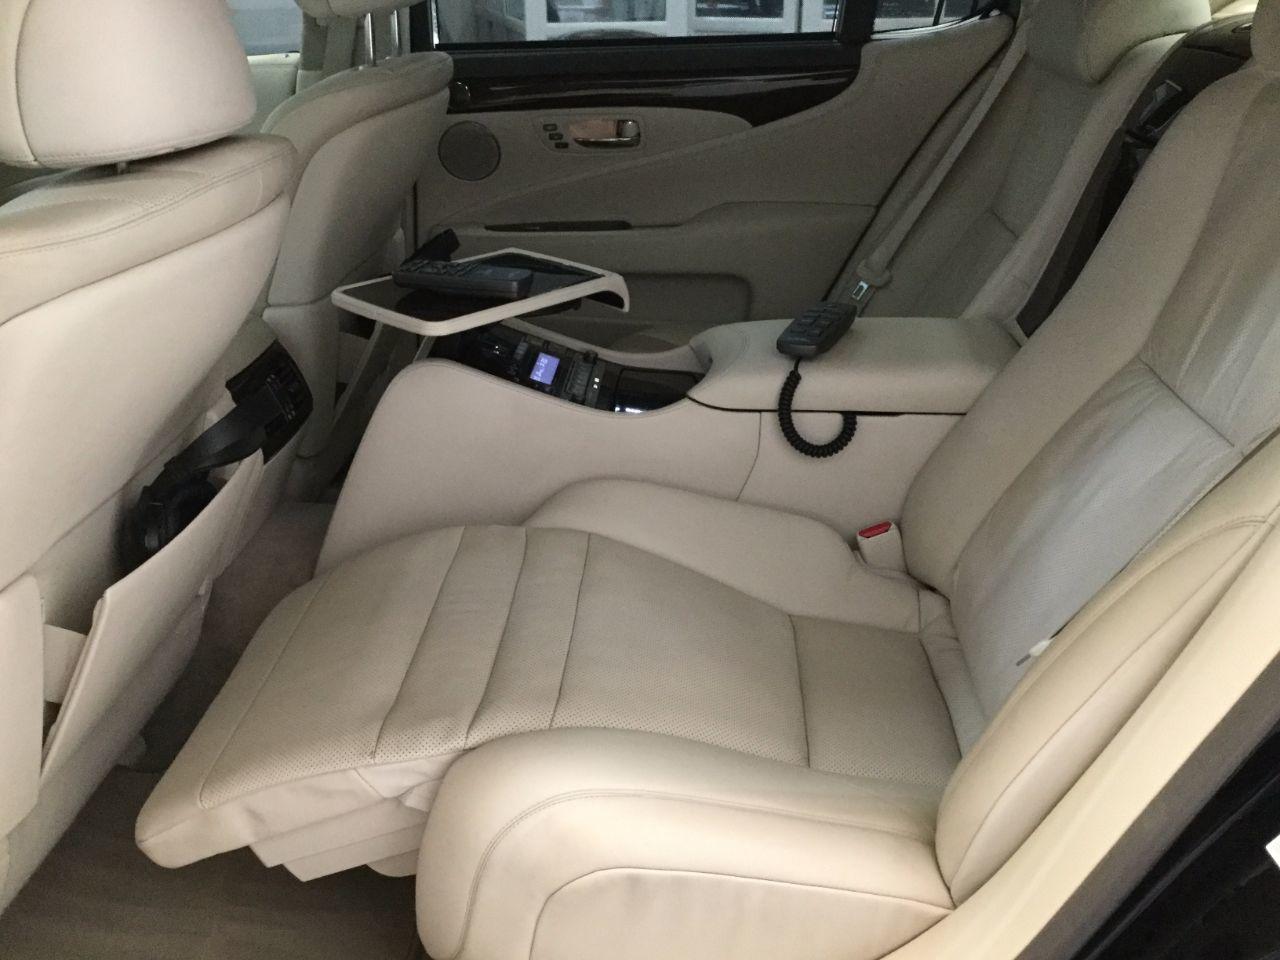 Lexus LS 600h L 5.0 V8 4dr CVT Auto [Rear Relaxation Pack] Saloon Hybrid Windsor Blue Metallic